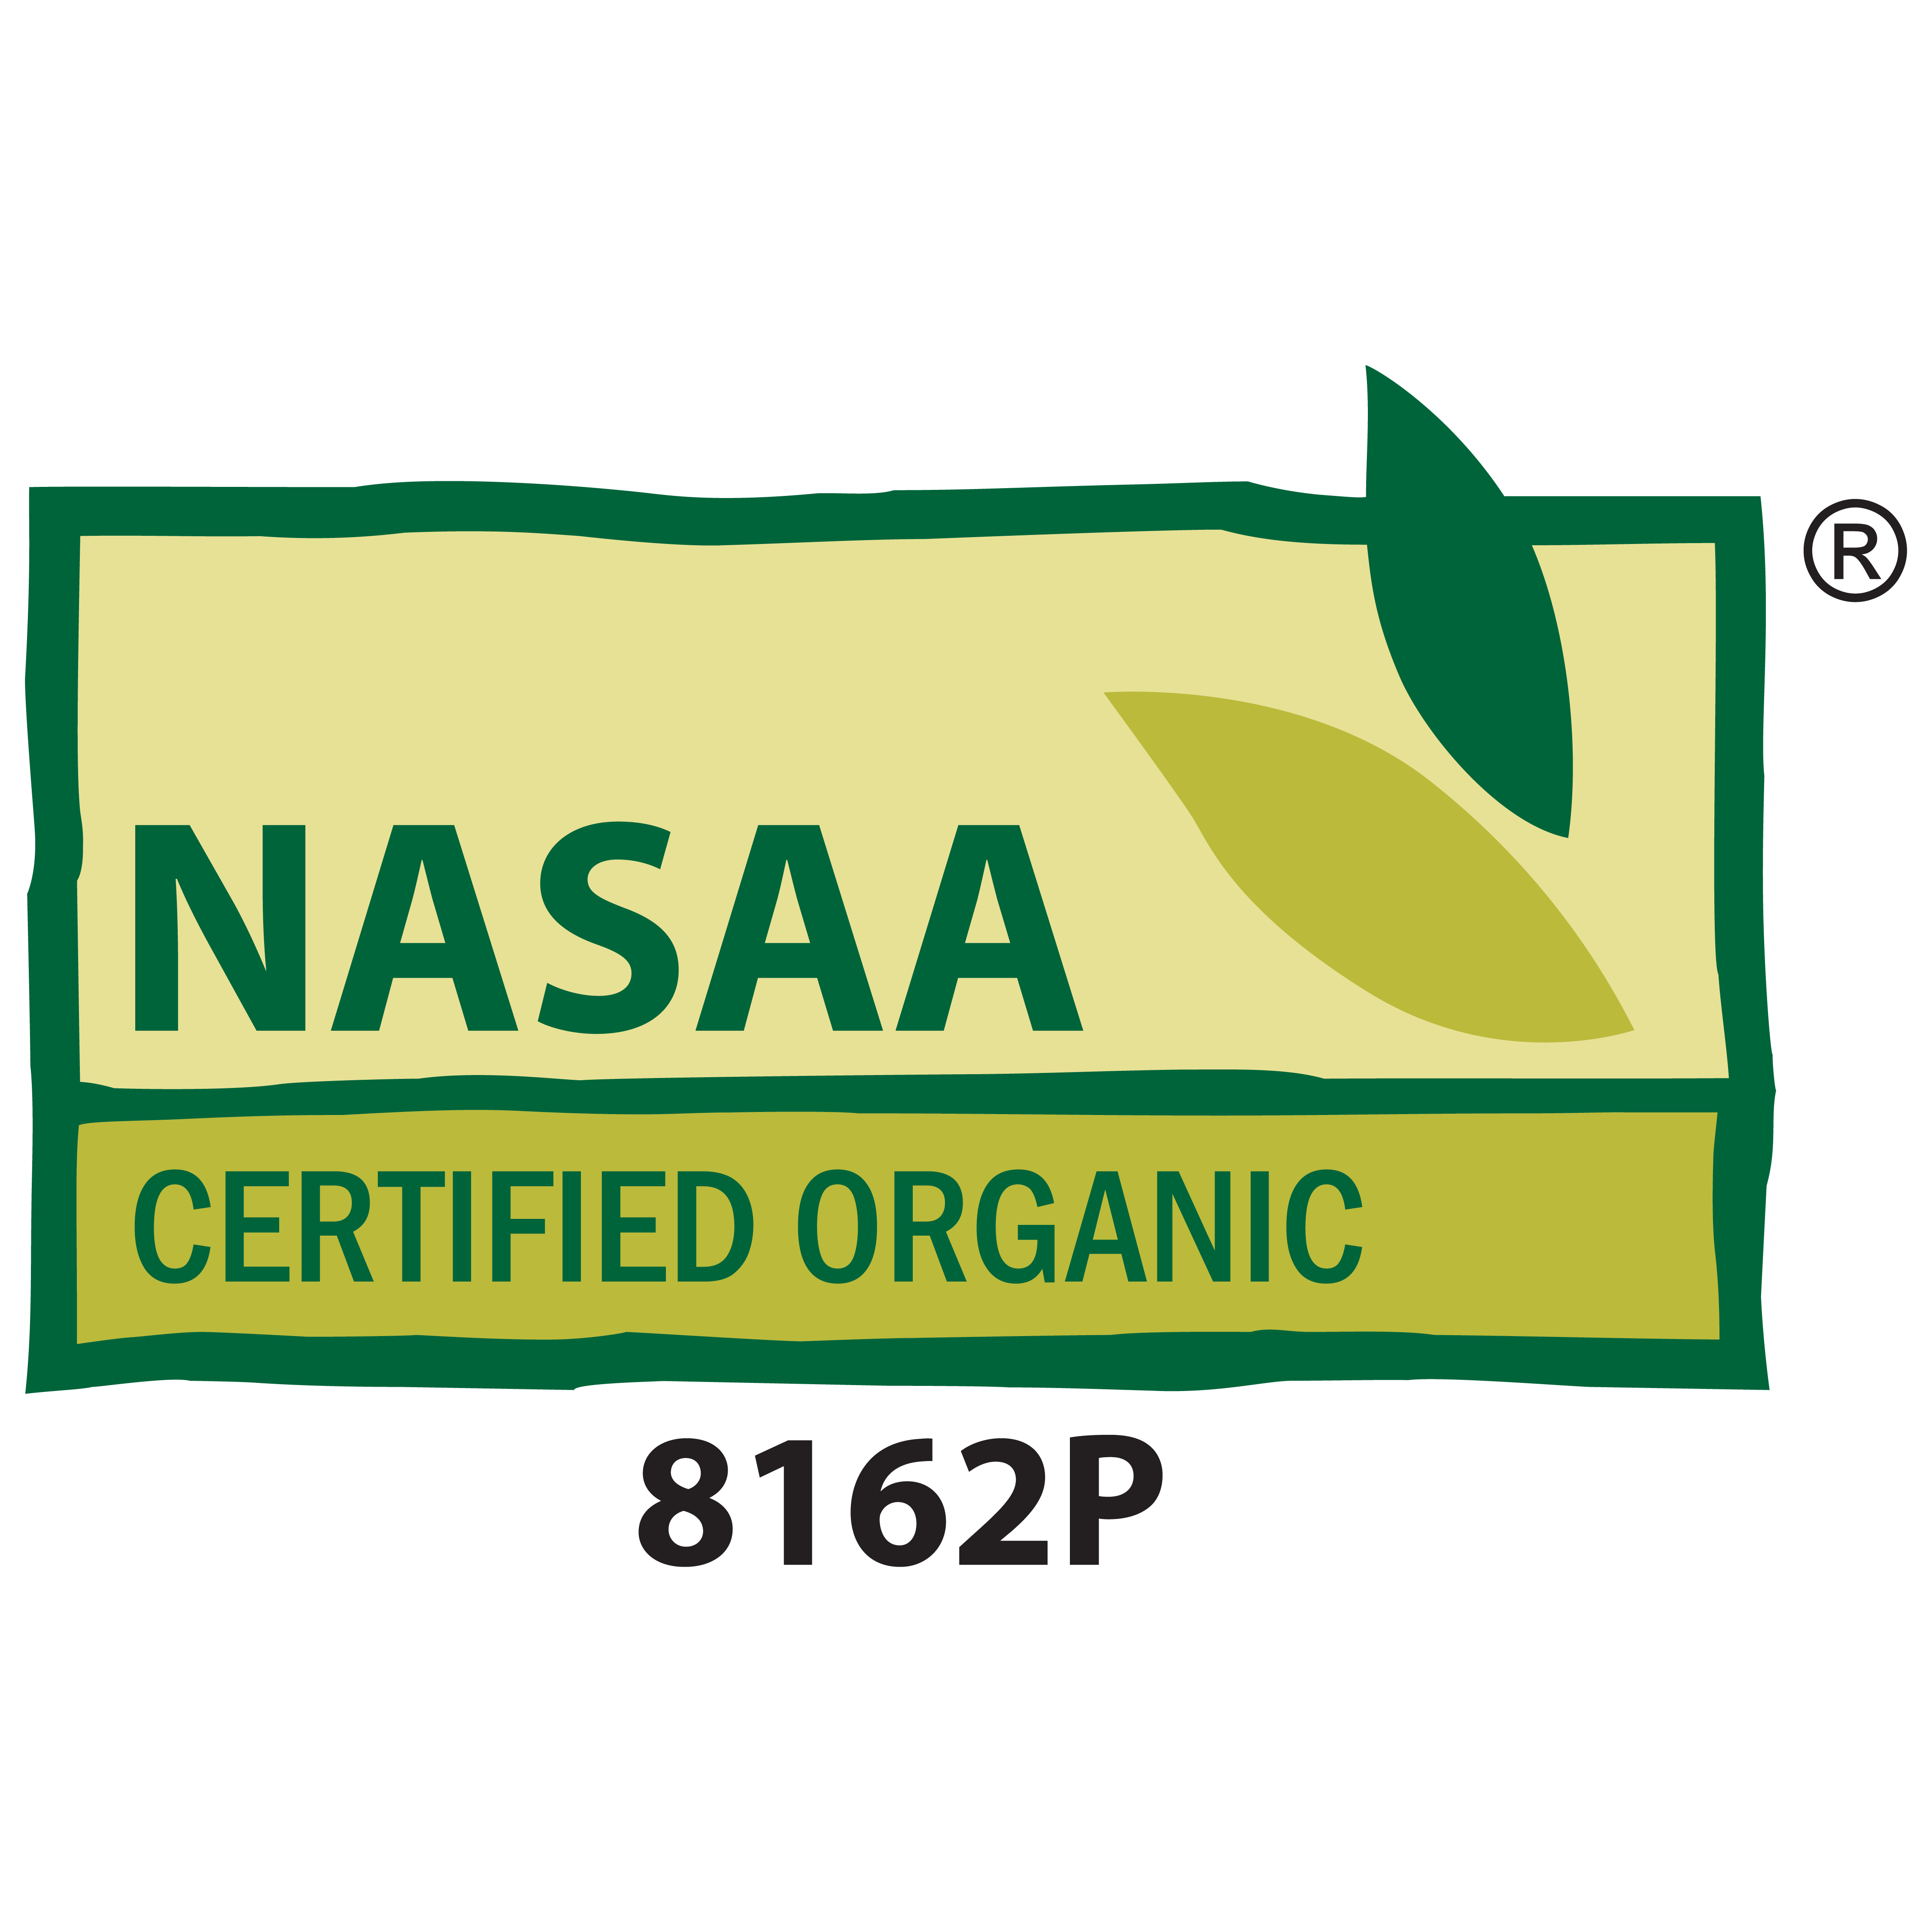 NASAA Logo - Certification